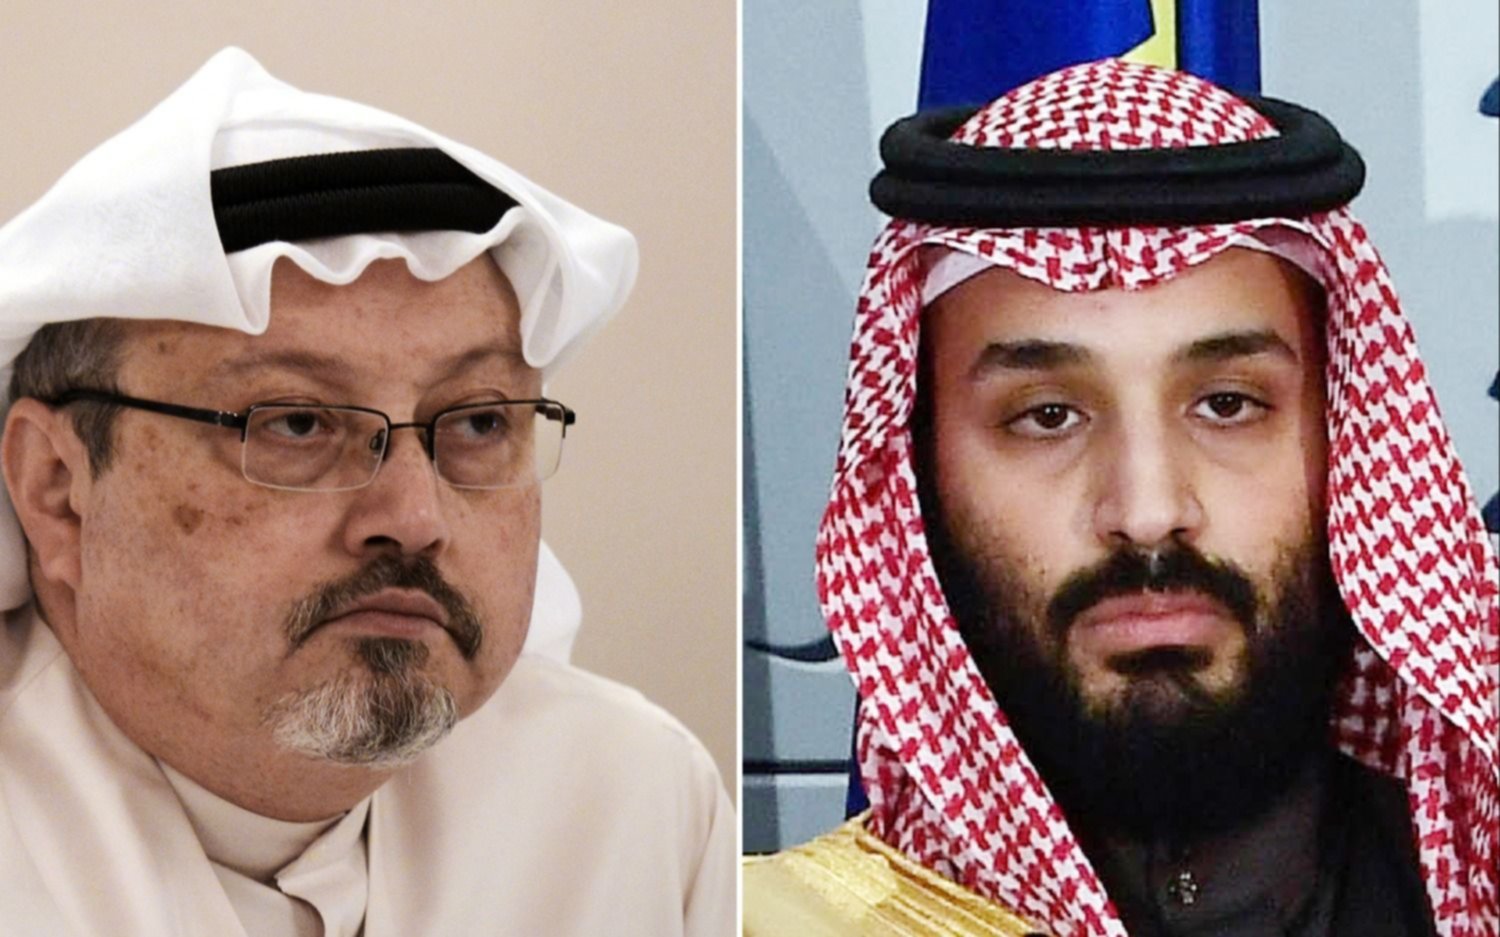 EEUU dice que el príncipe saudita autorizó "capturar o matar" al periodista Jamal Khashoggi